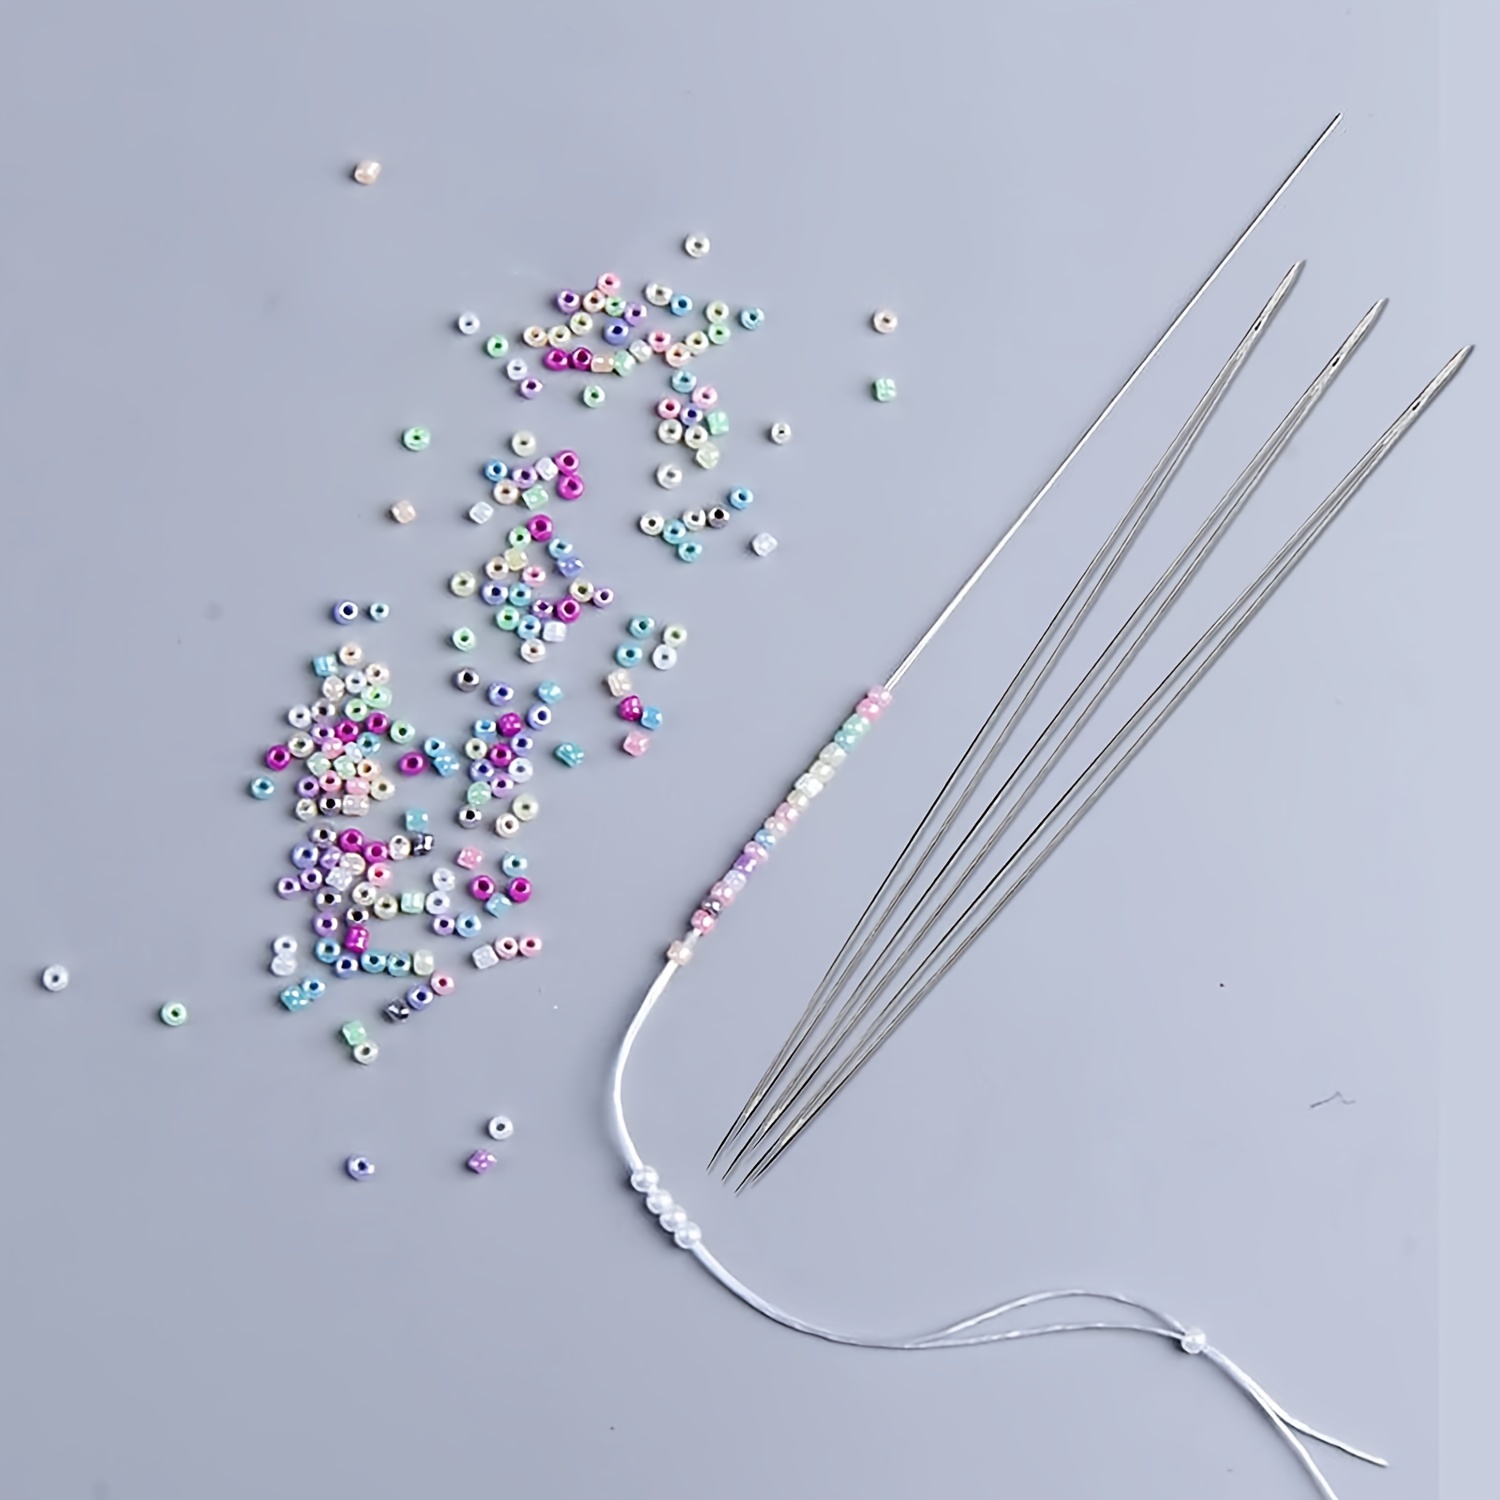  16 Pieces Beading Needles, Seed Beads Needles Beading  Embroidery Needles Big Eye Collapsible Beading Needles Set for Jewelry  Making with Needle Bottle (8 Sizes) : Arts, Crafts & Sewing